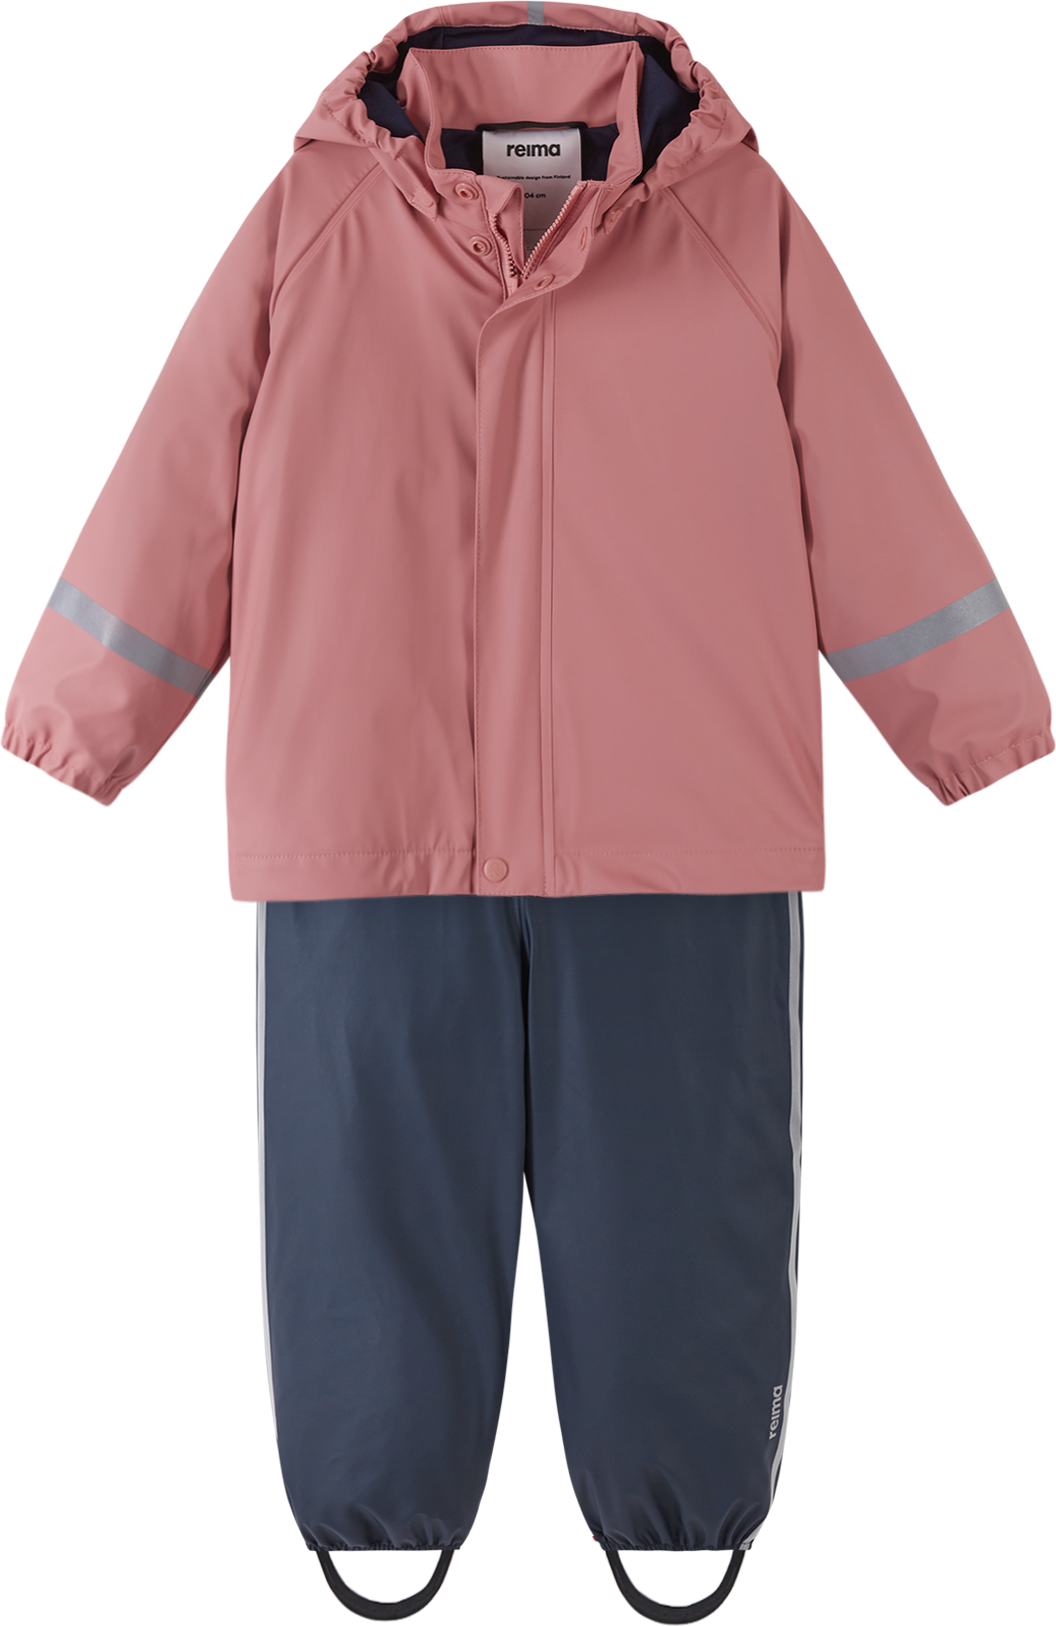 Reima Reima Kids' Tipotella Rain Outfit Rose Blush 116 cm, Rose Blush